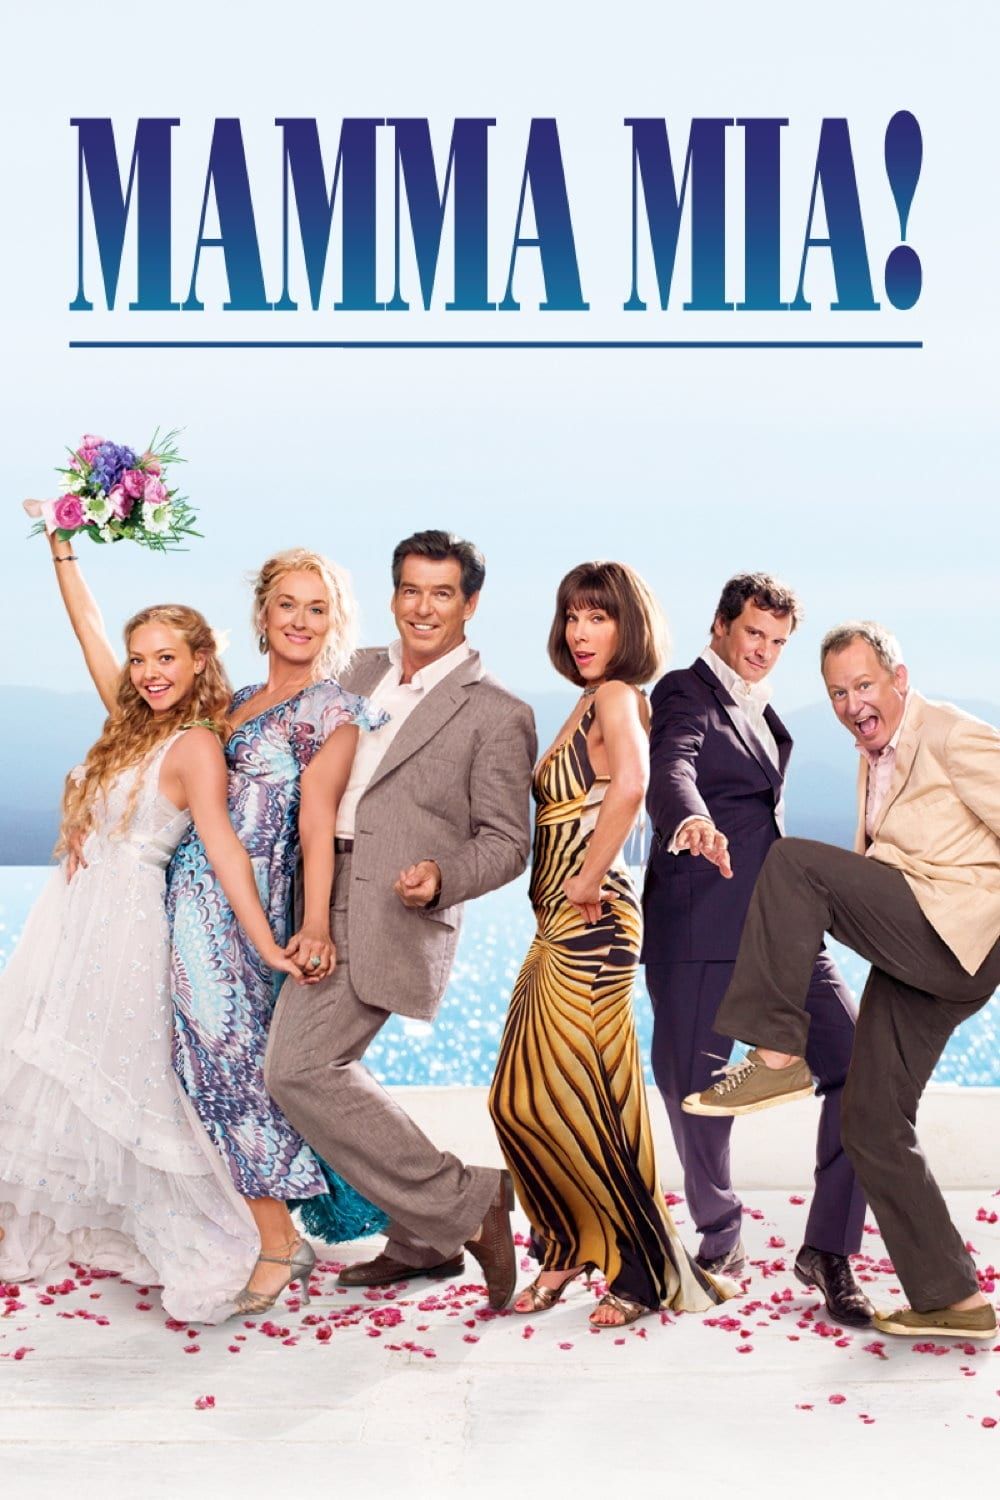 Mamma Mia!' Cast and Crew Discuss Movie for 15-Year Anniversary